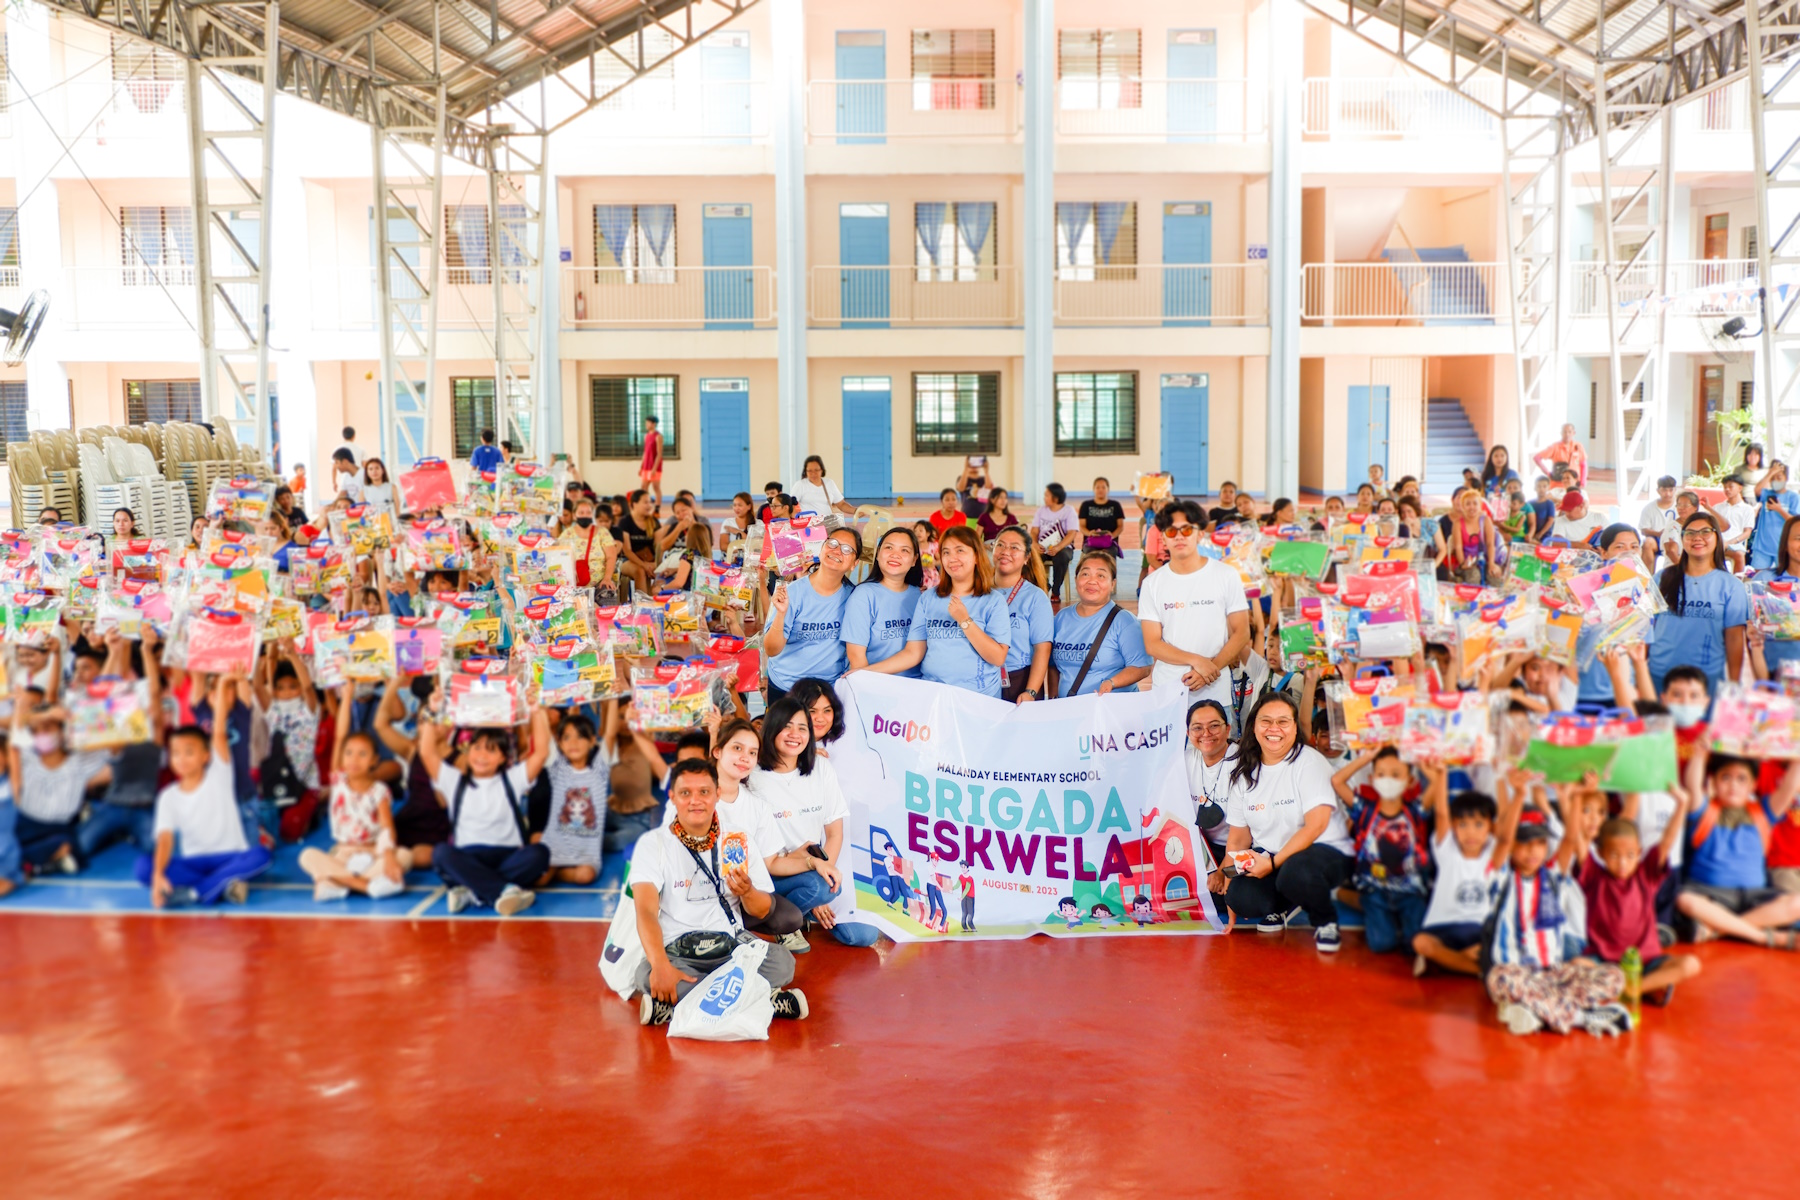 Digido, UnaCash bolster commitment to education, bayanihan with Brigada Eskwela support